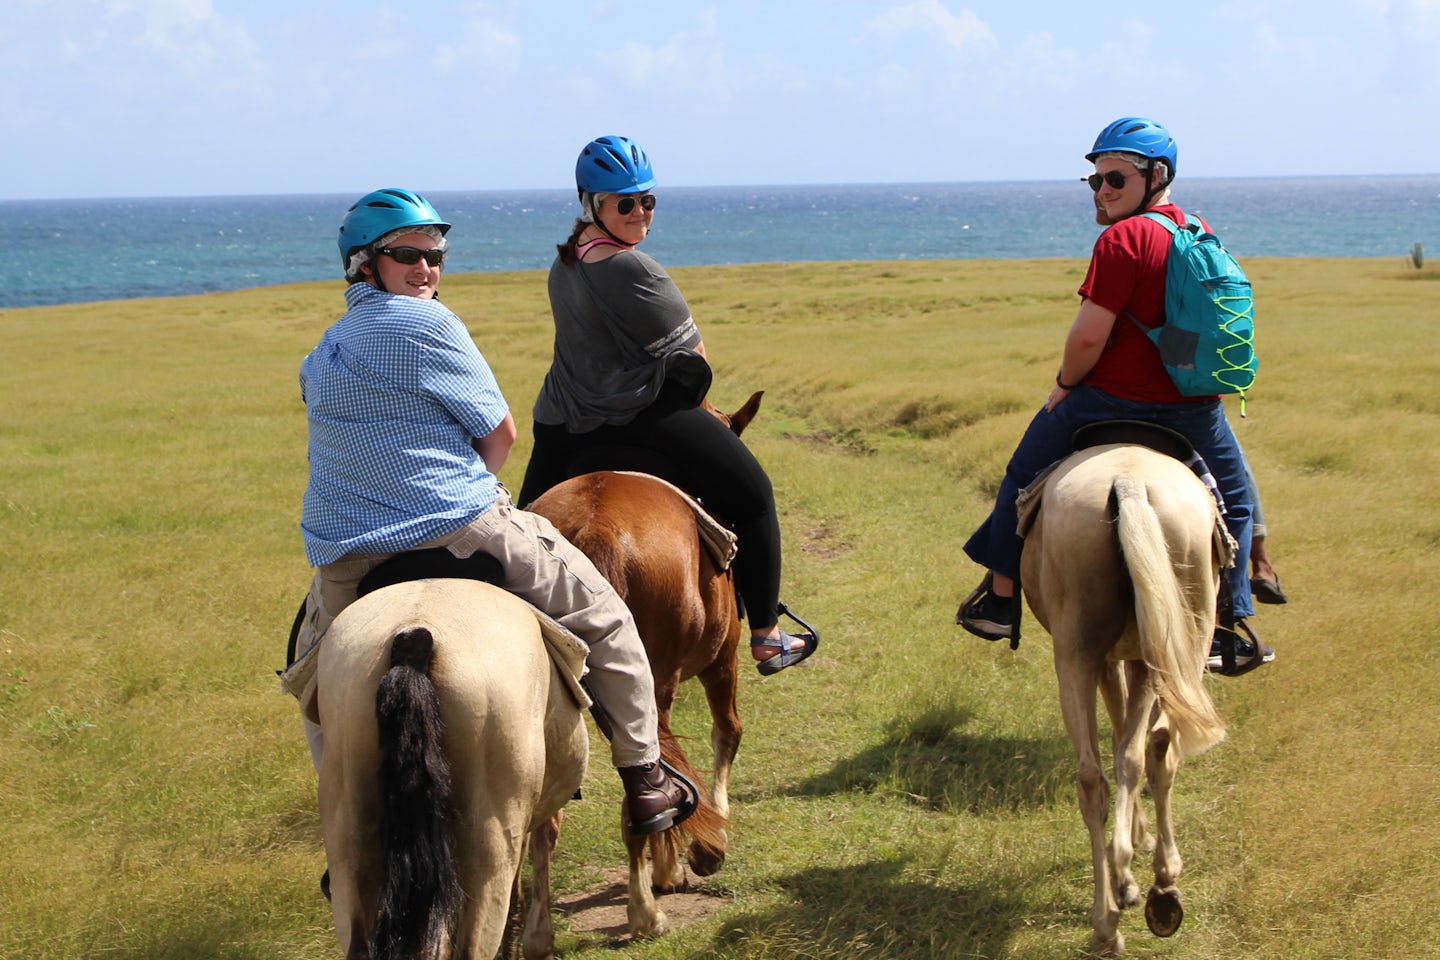 St Lucia, 3 hour horseback ride via Atlantic Stables